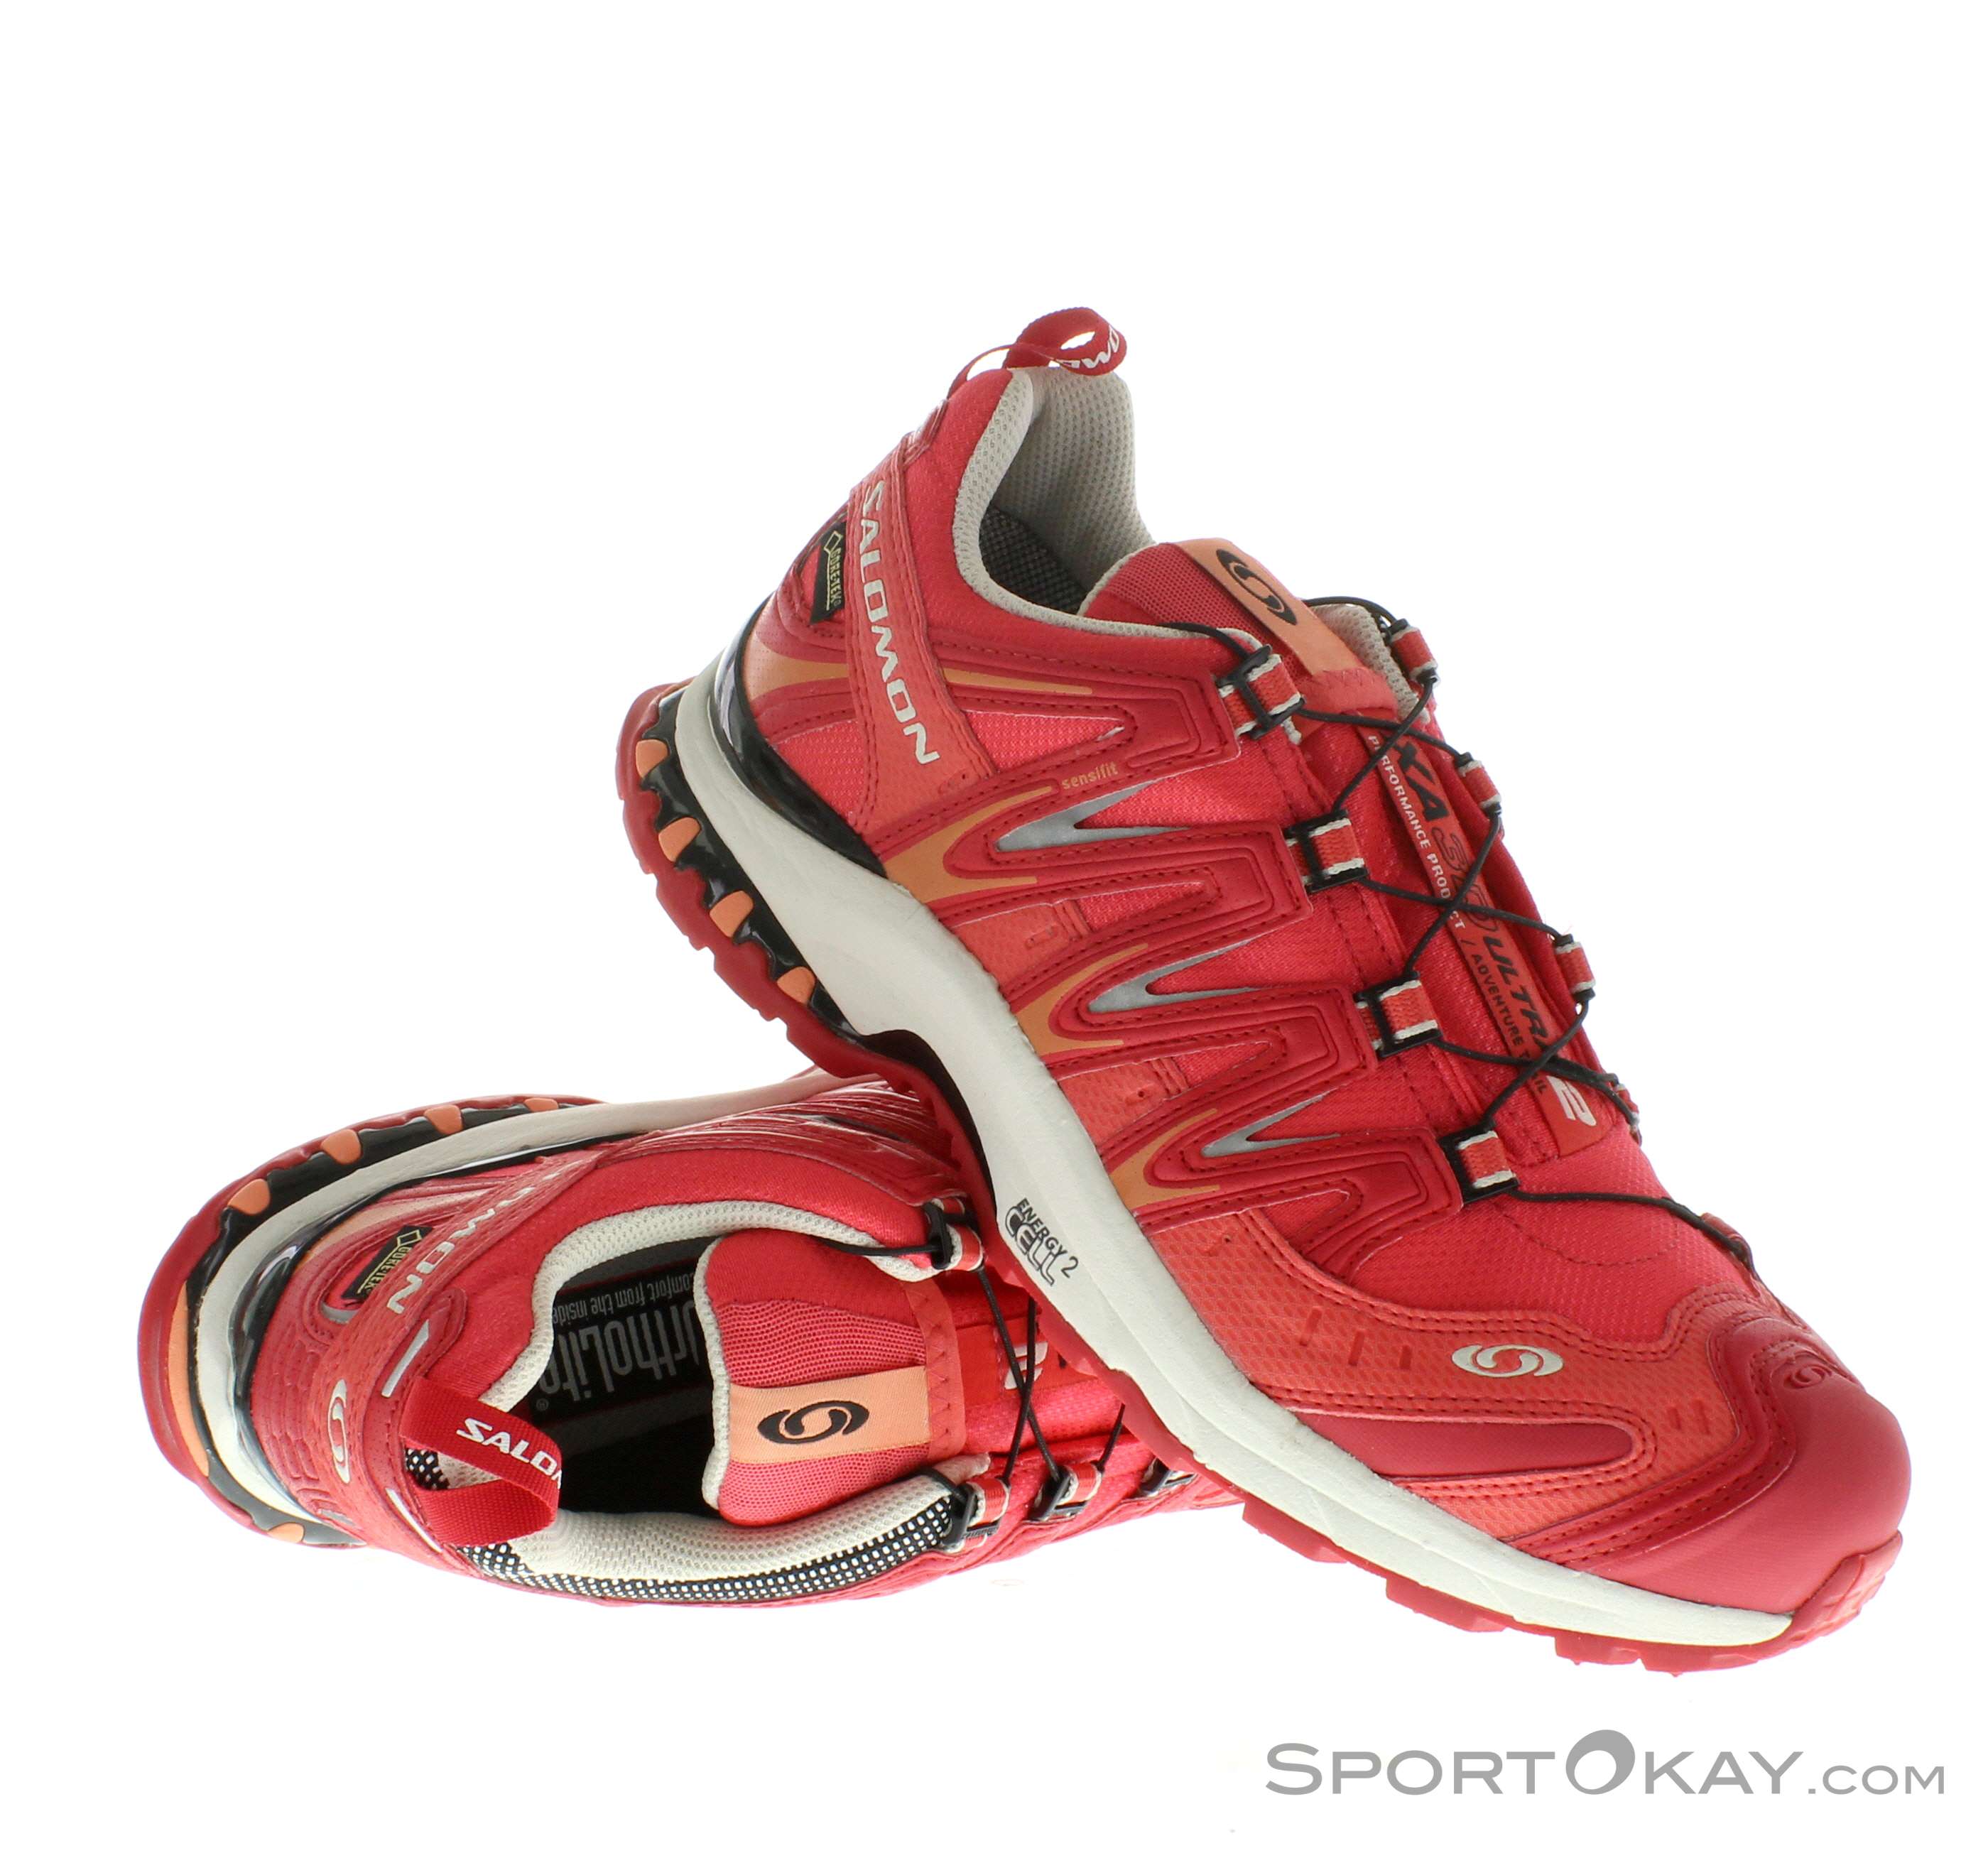 Salomon XA Pro 3D Ultra 2 GTX Damen Gore-Tex Running Shoes - Running Shoes - Running - All